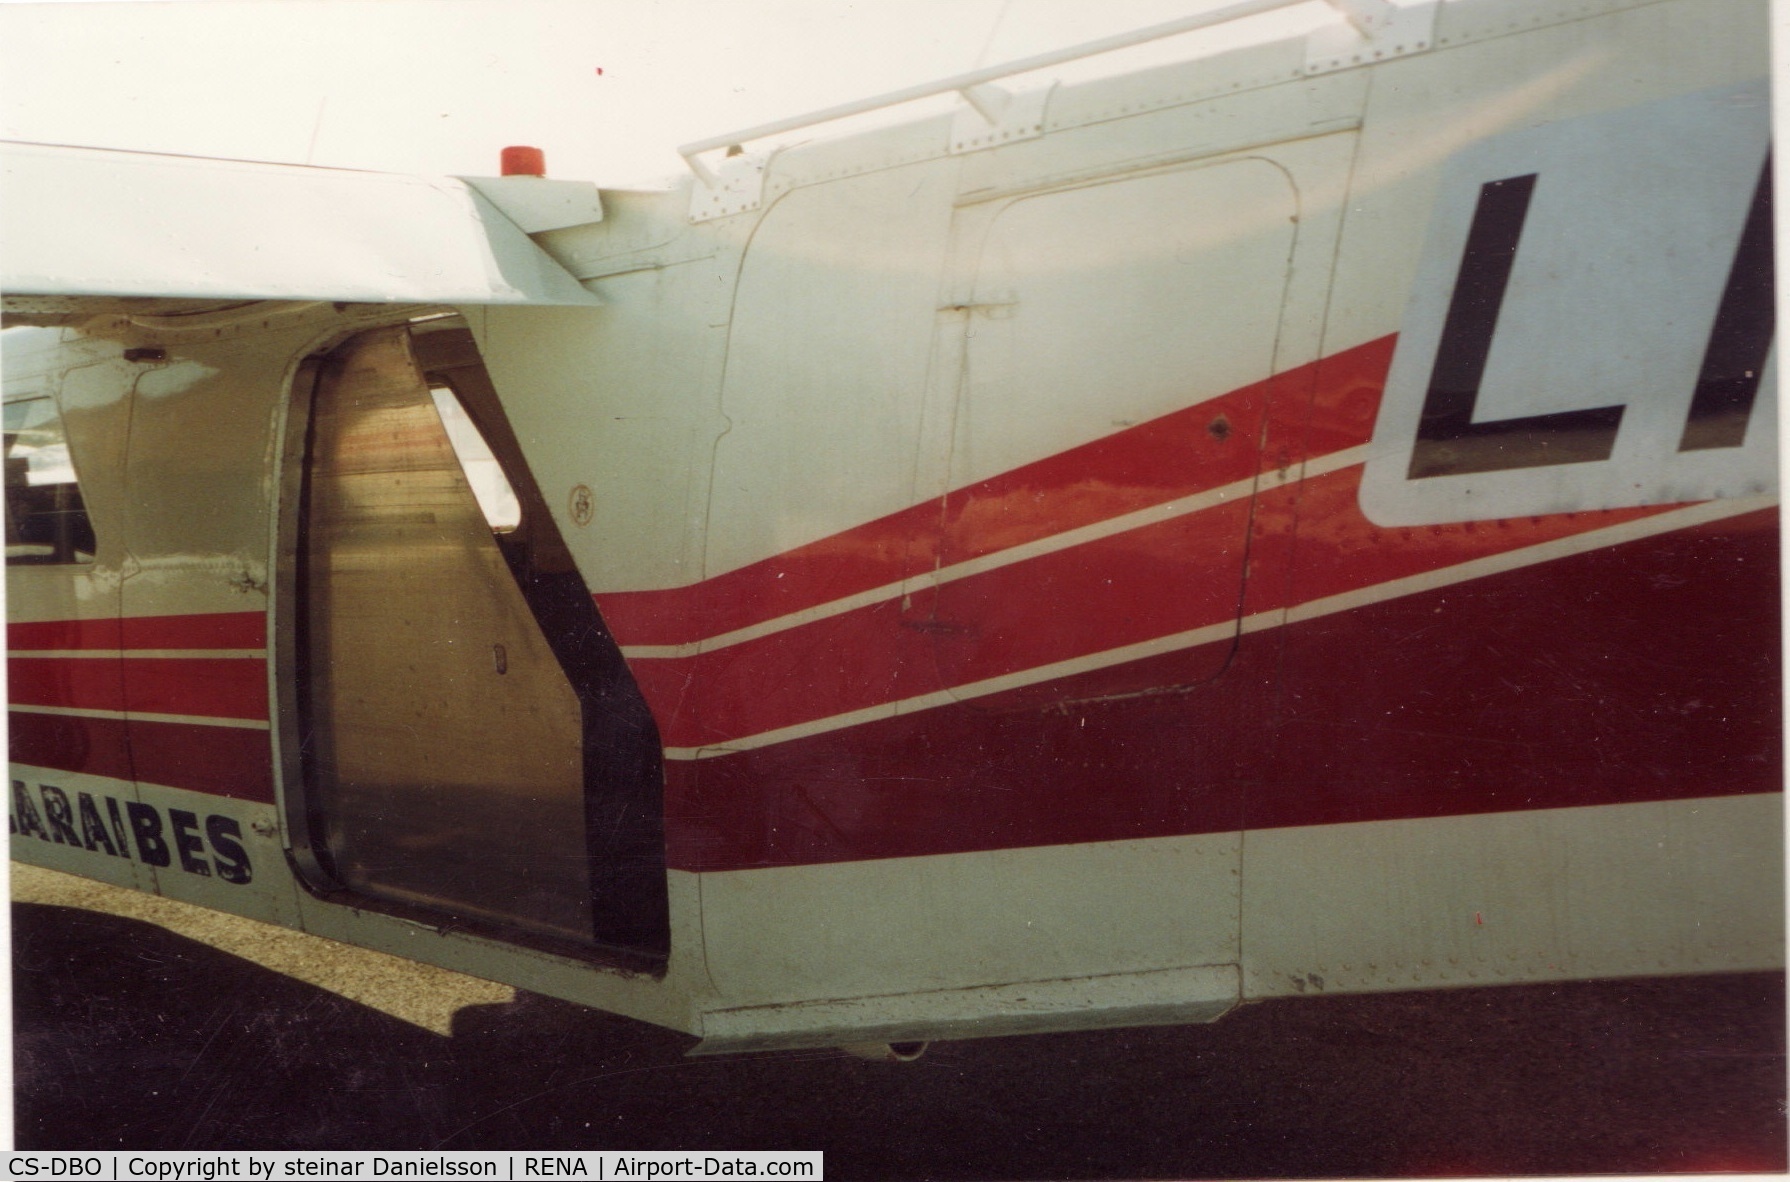 CS-DBO, 1973 Britten-Norman BN-2A-20 Islander C/N 352, LN-FSK (FallSkjermKlubb (Parachuteclub) Before it was sold to Portugal